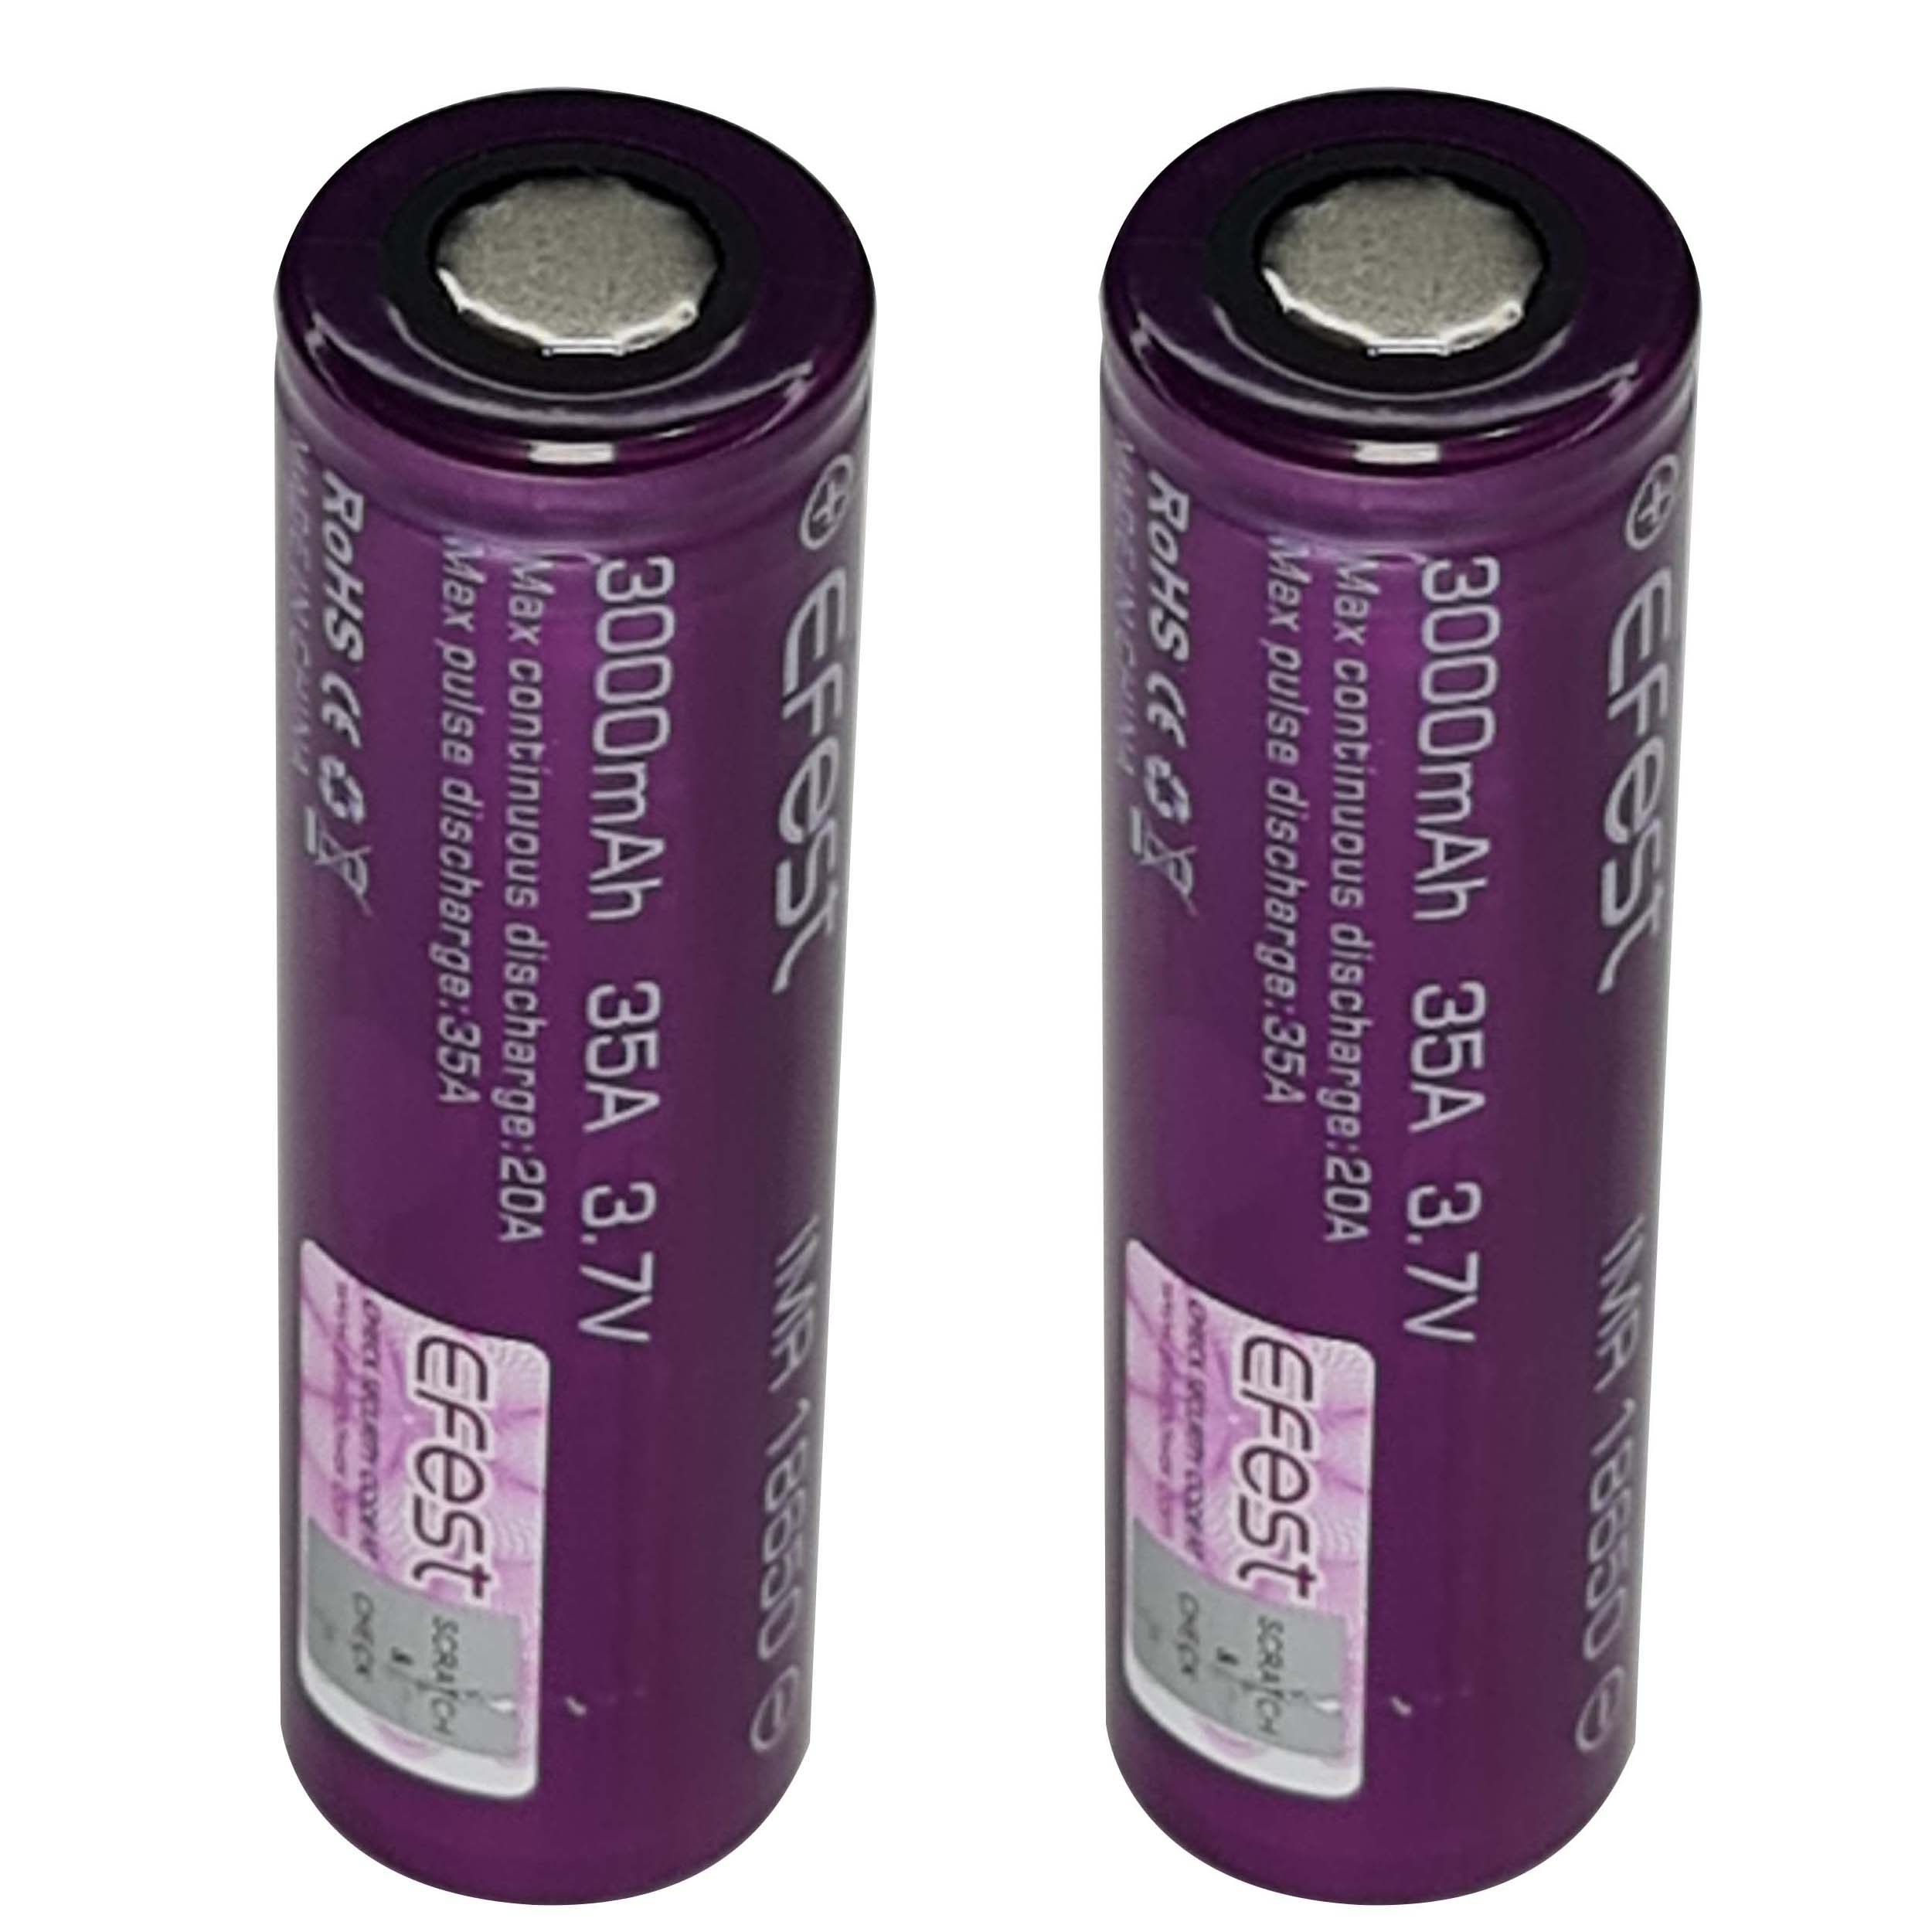 باتری لیتیوم یون قابل شارژ افست مدل HP-18650-35A ظرفیت 3000 میلی آمپر ساعت بسته دو عددی